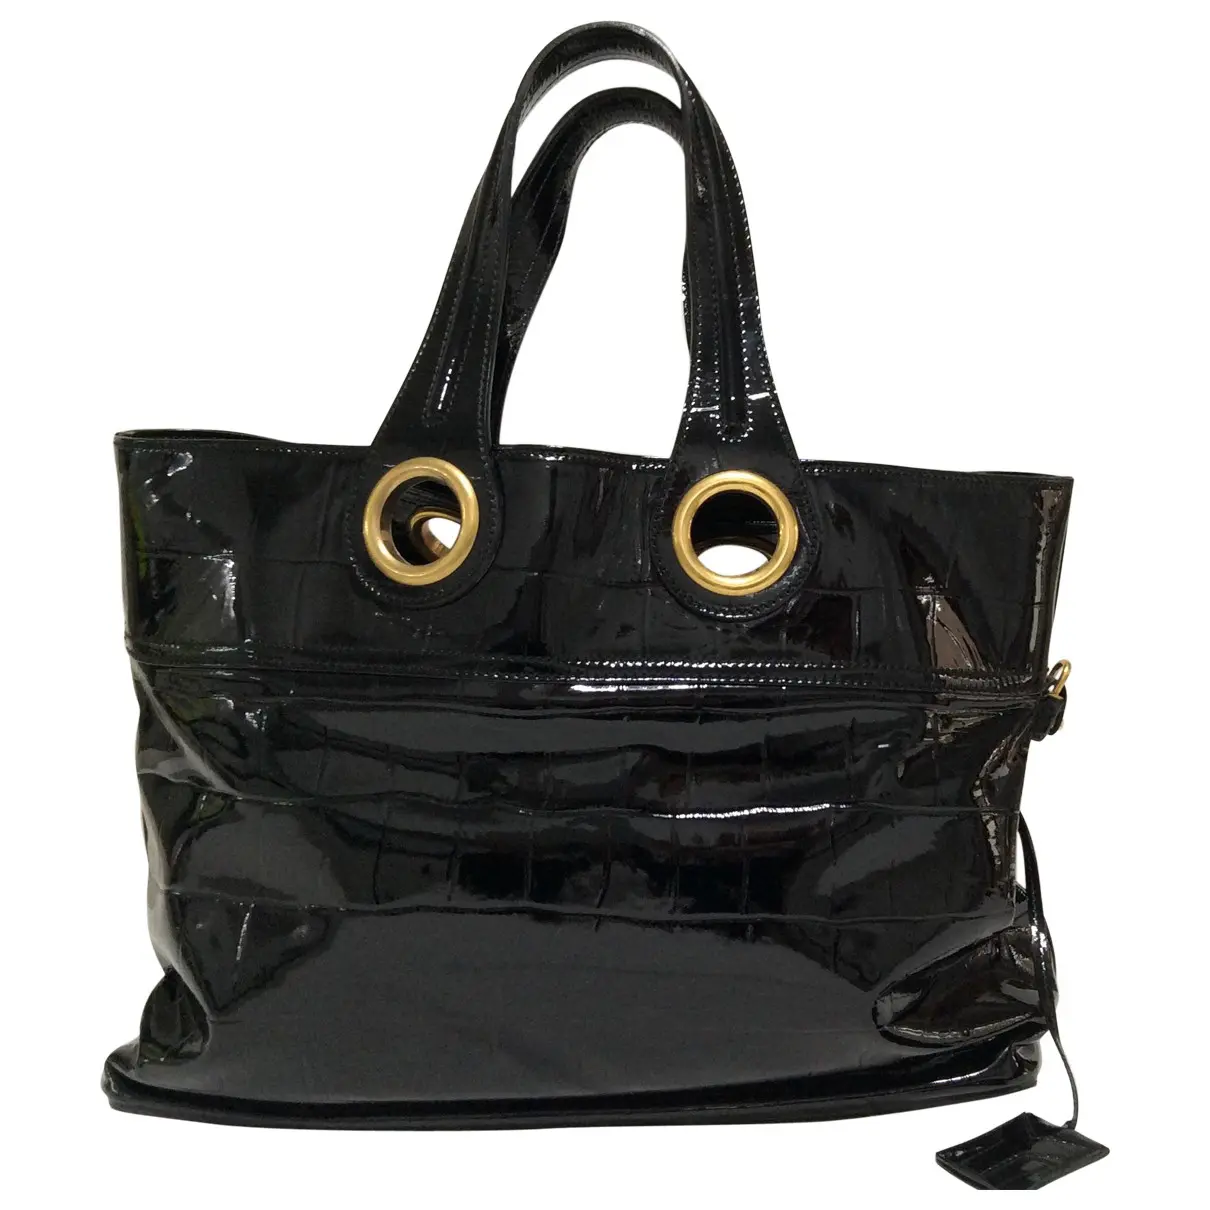 Black Patent leather Handbag Yves Saint Laurent